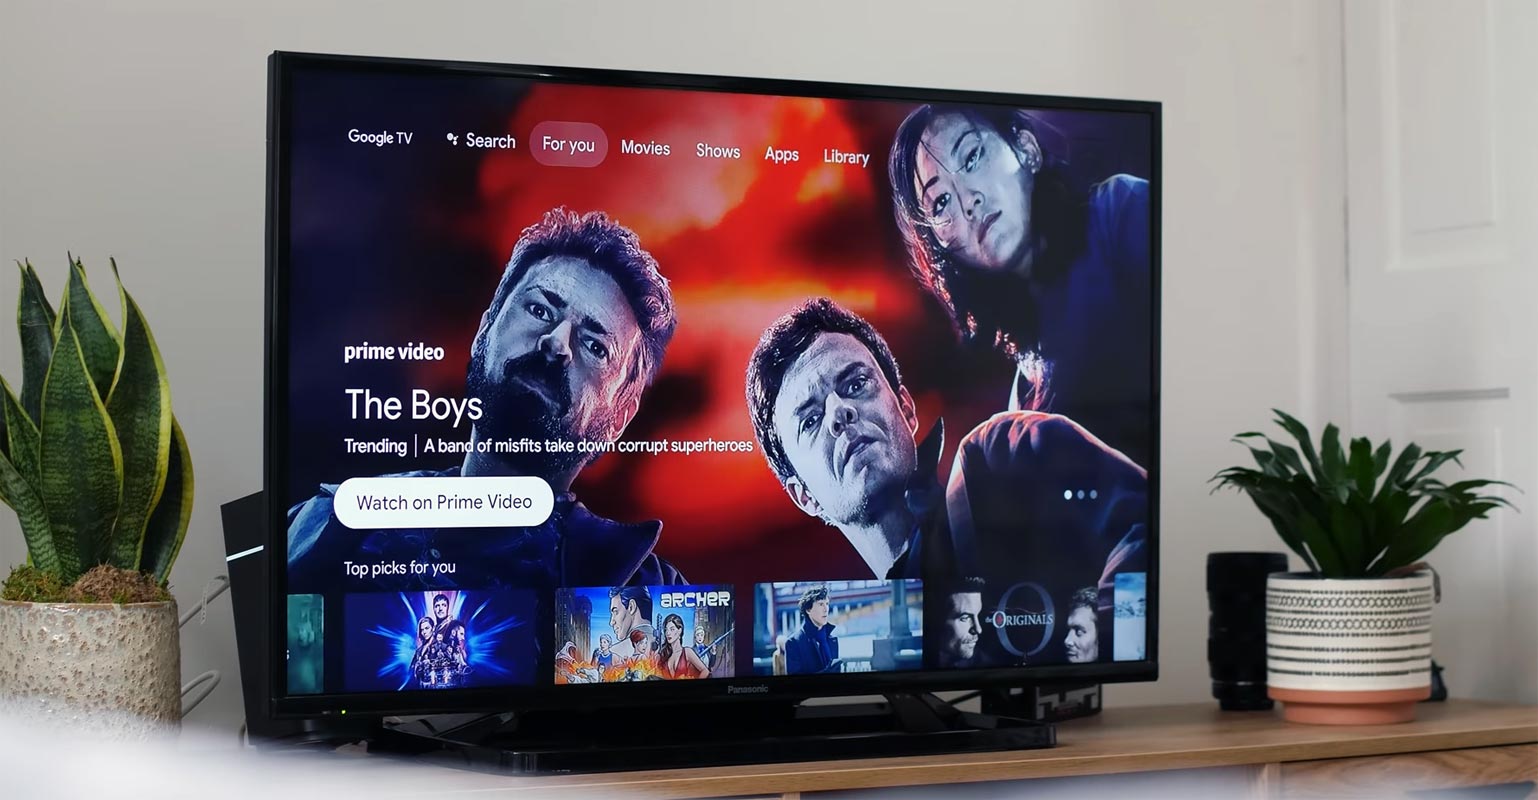 Google TV Chromecast Home Page with Multi User Profile